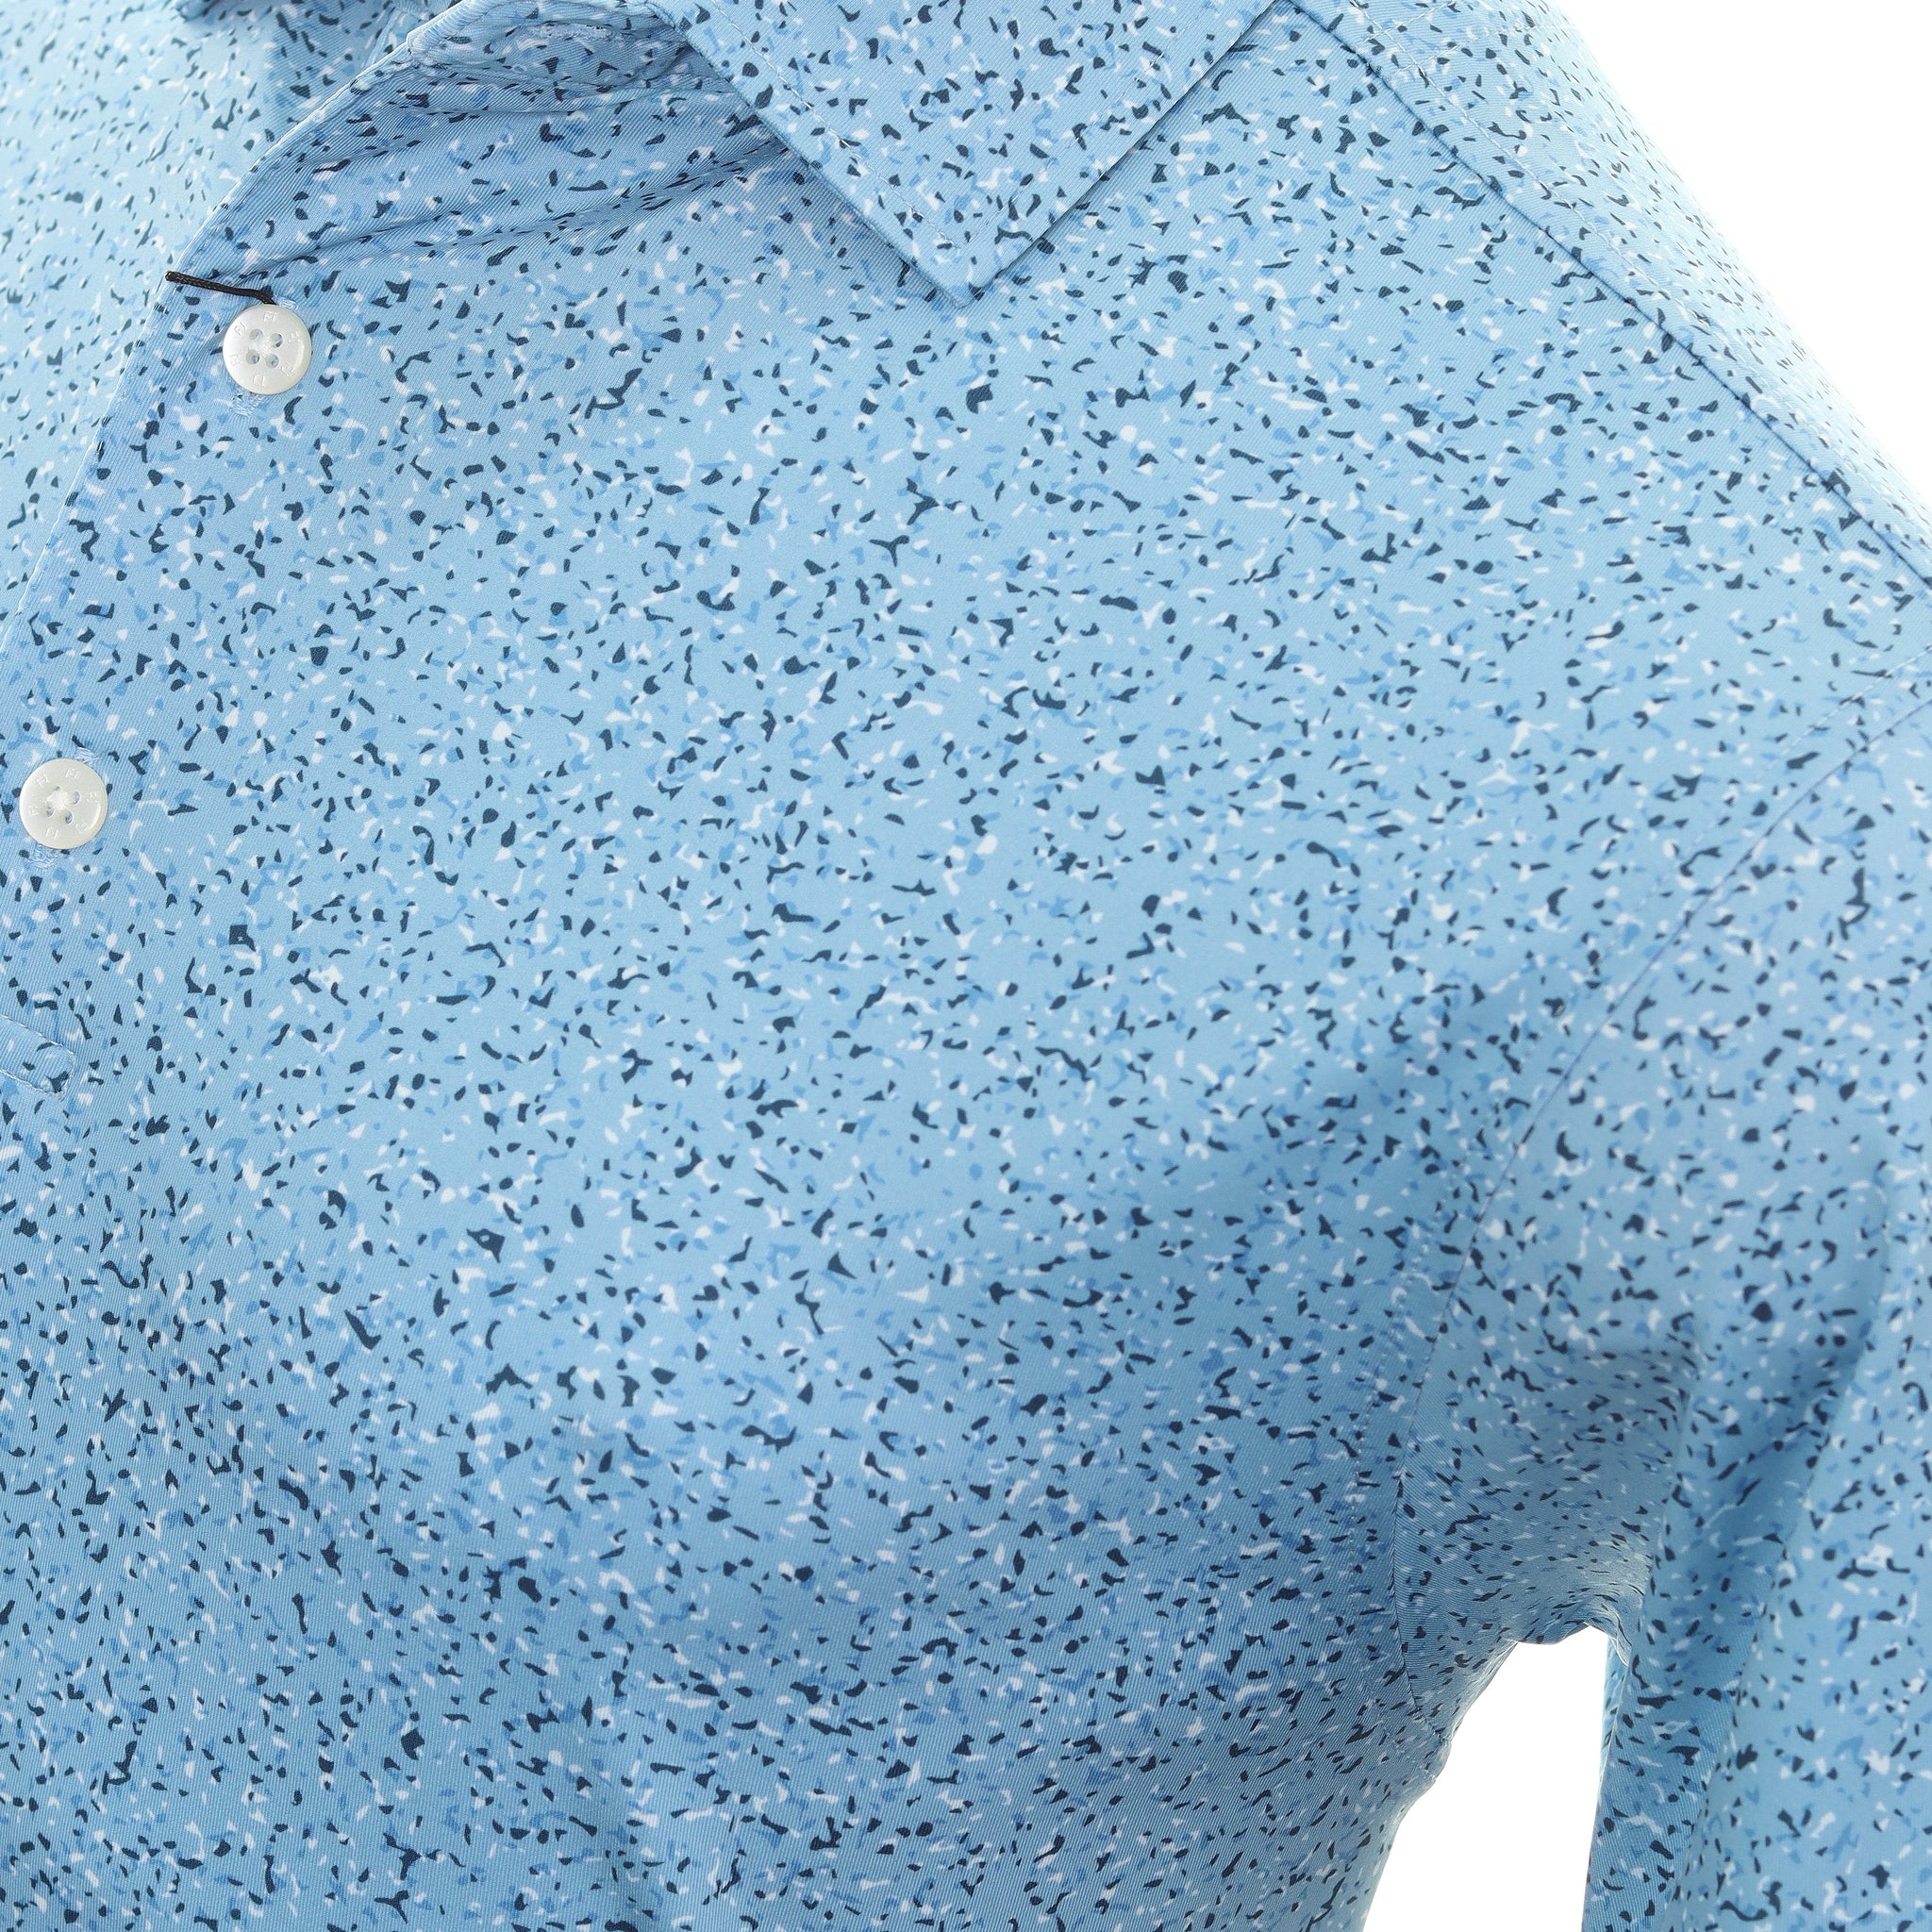 footjoy-granite-print-golf-shirt-88417-dusk-blue